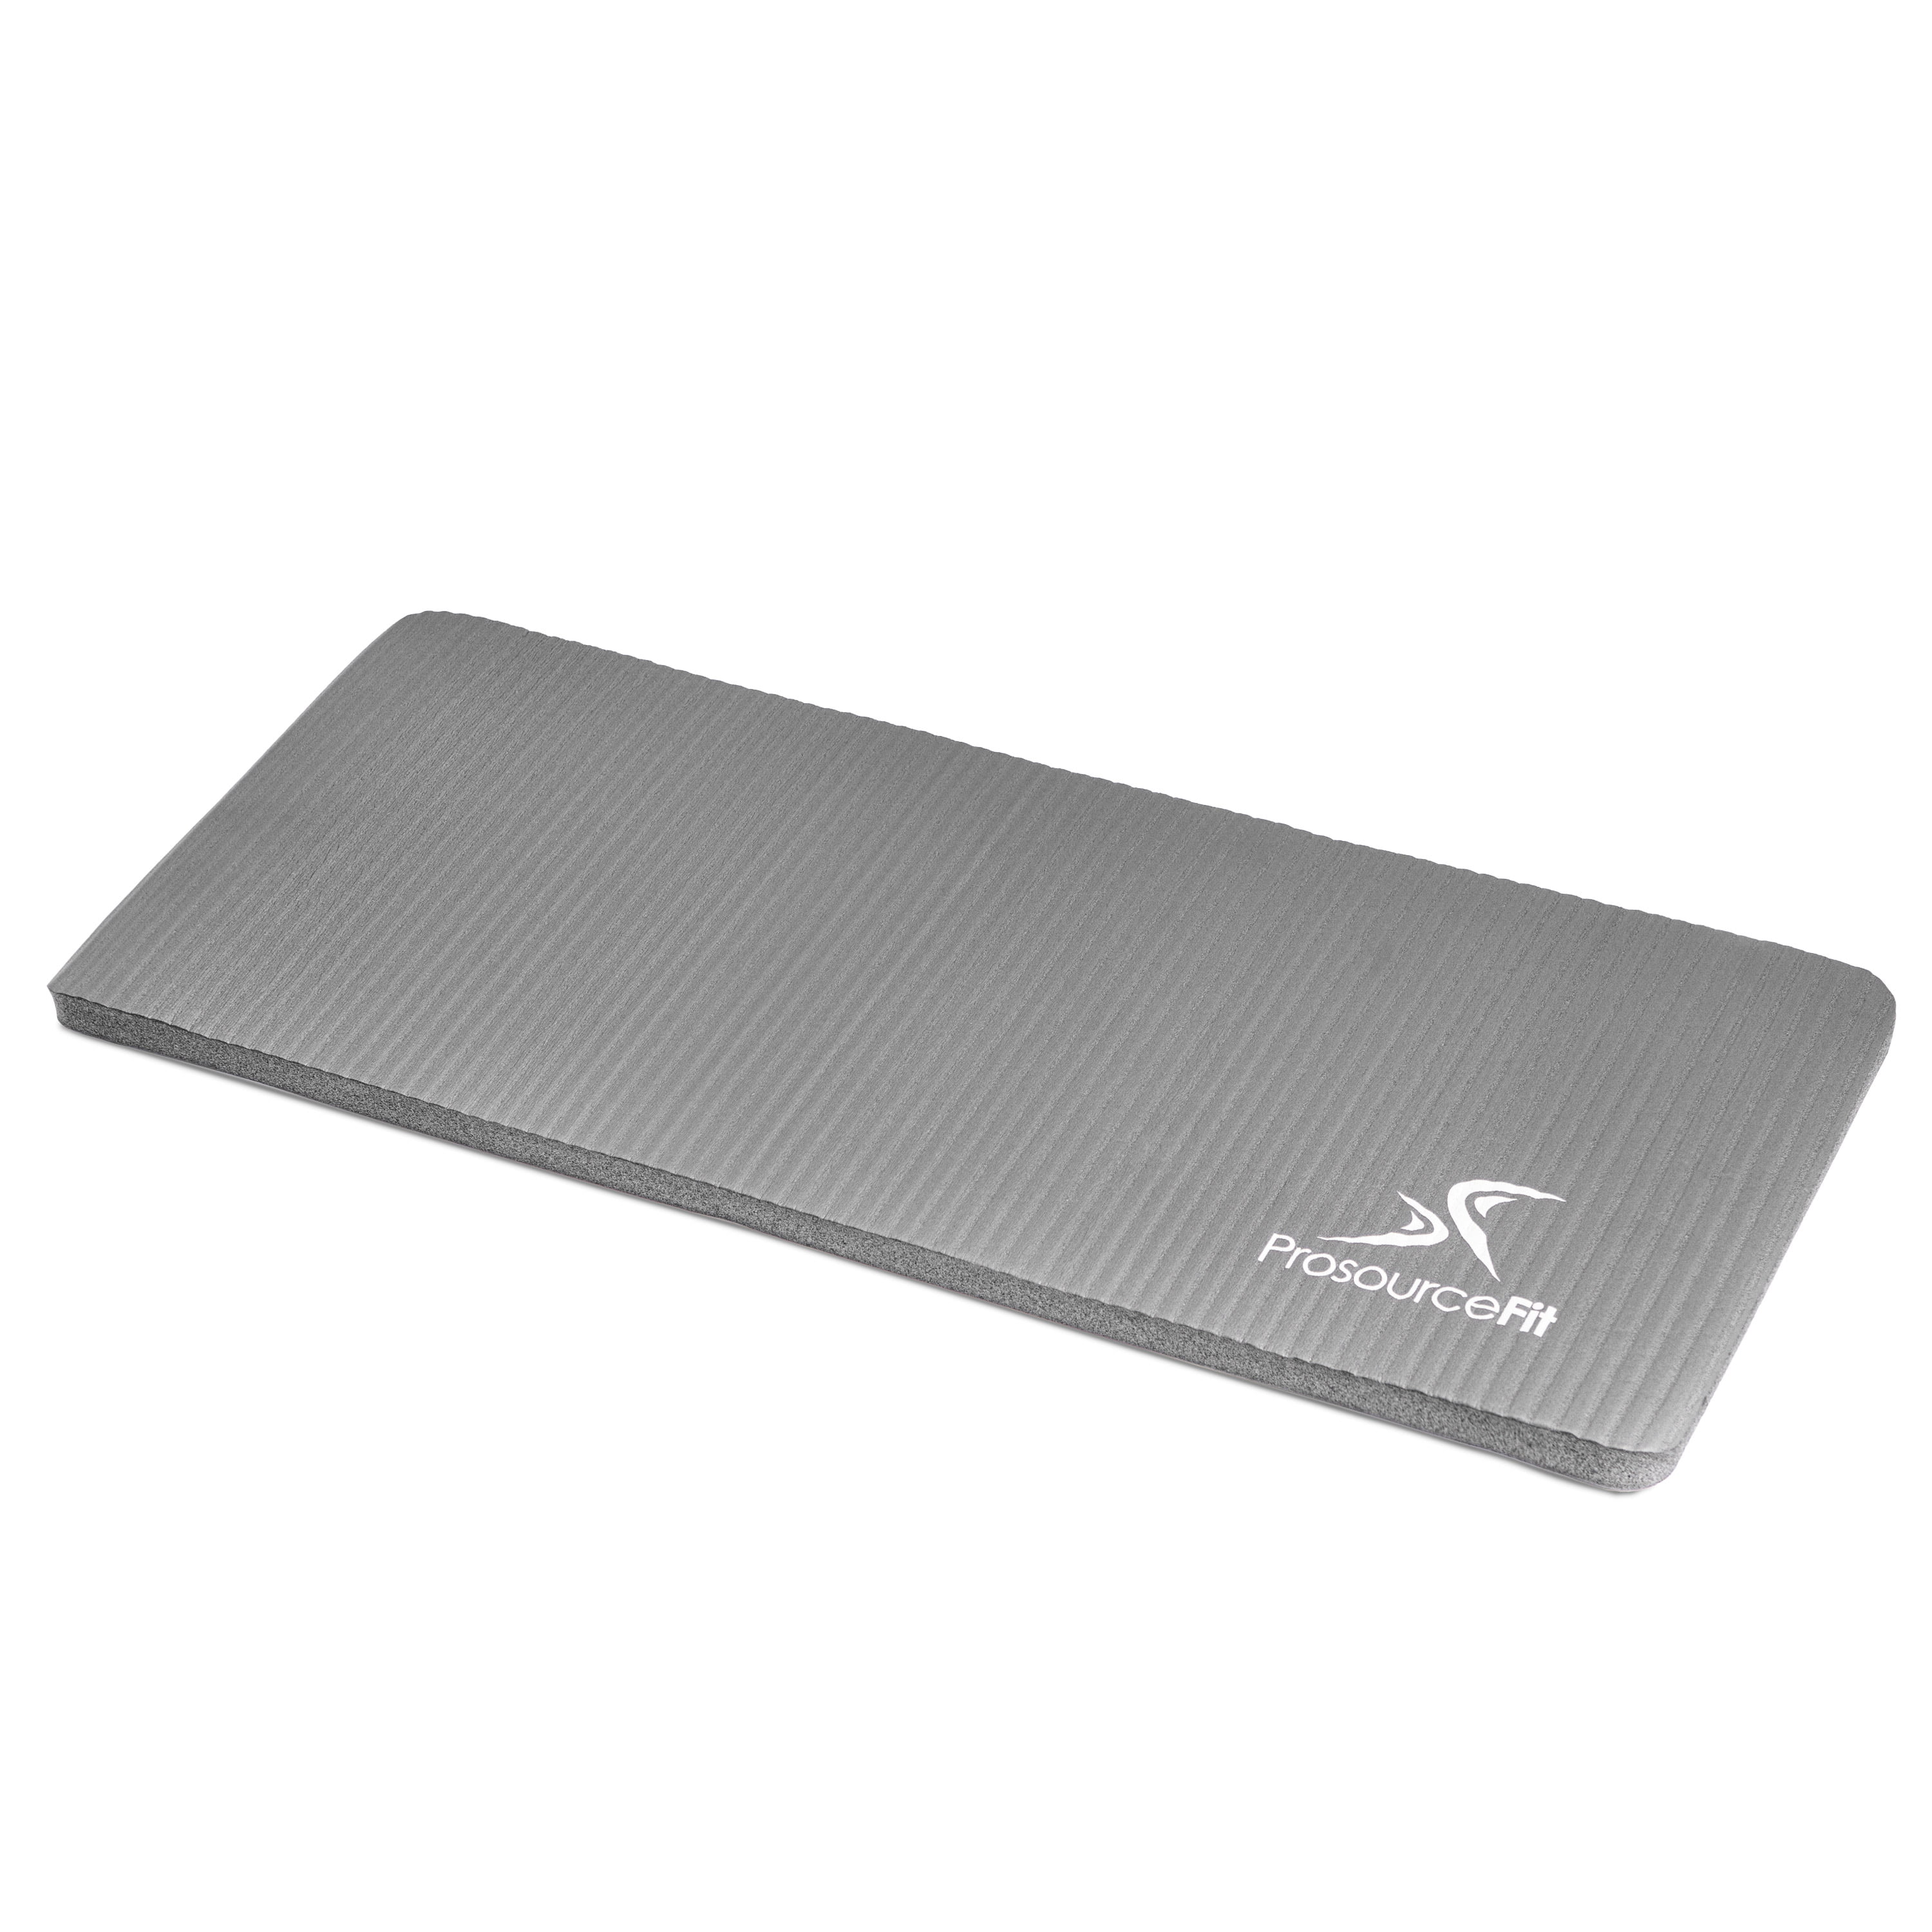 24X10''  Thick Kneeling Pad Protection Foam Knee Mat Cushion Multi Application 